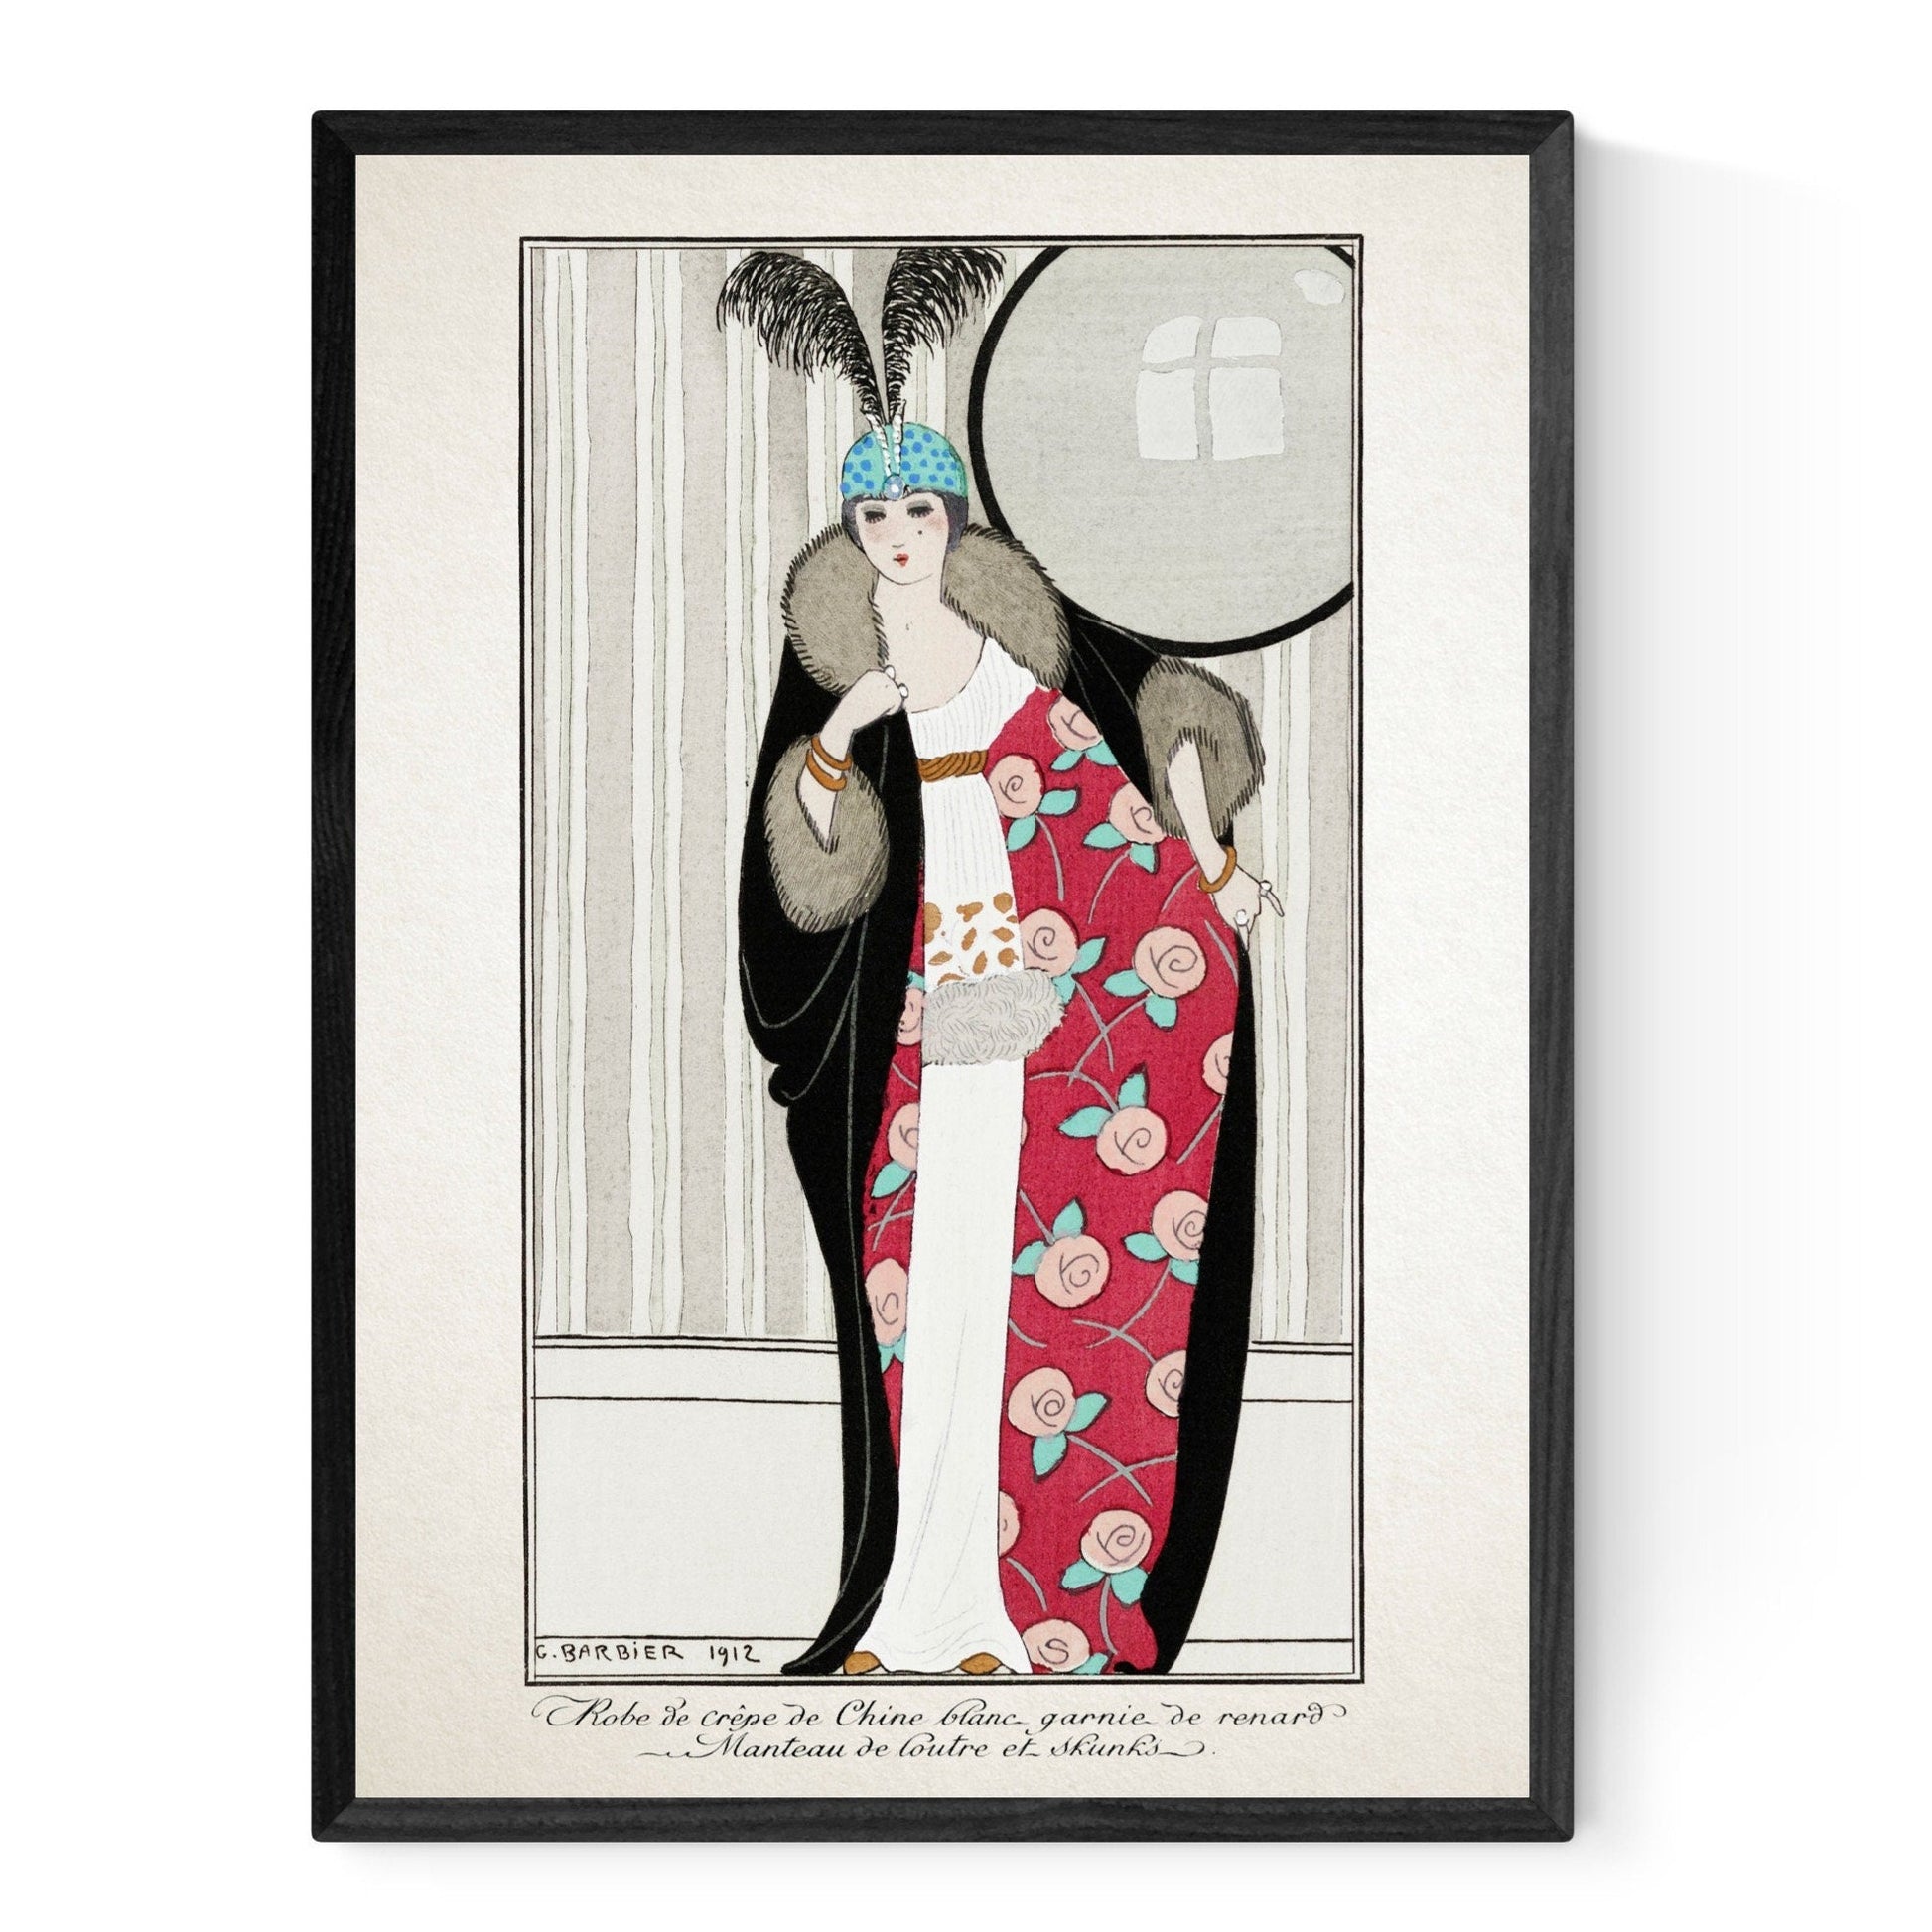 Set of Three Art Deco Prints | Vintage French Wall Art | 1930s Style Fashion | 3 Nouveau Poster Prints | Gallery Wall Prints